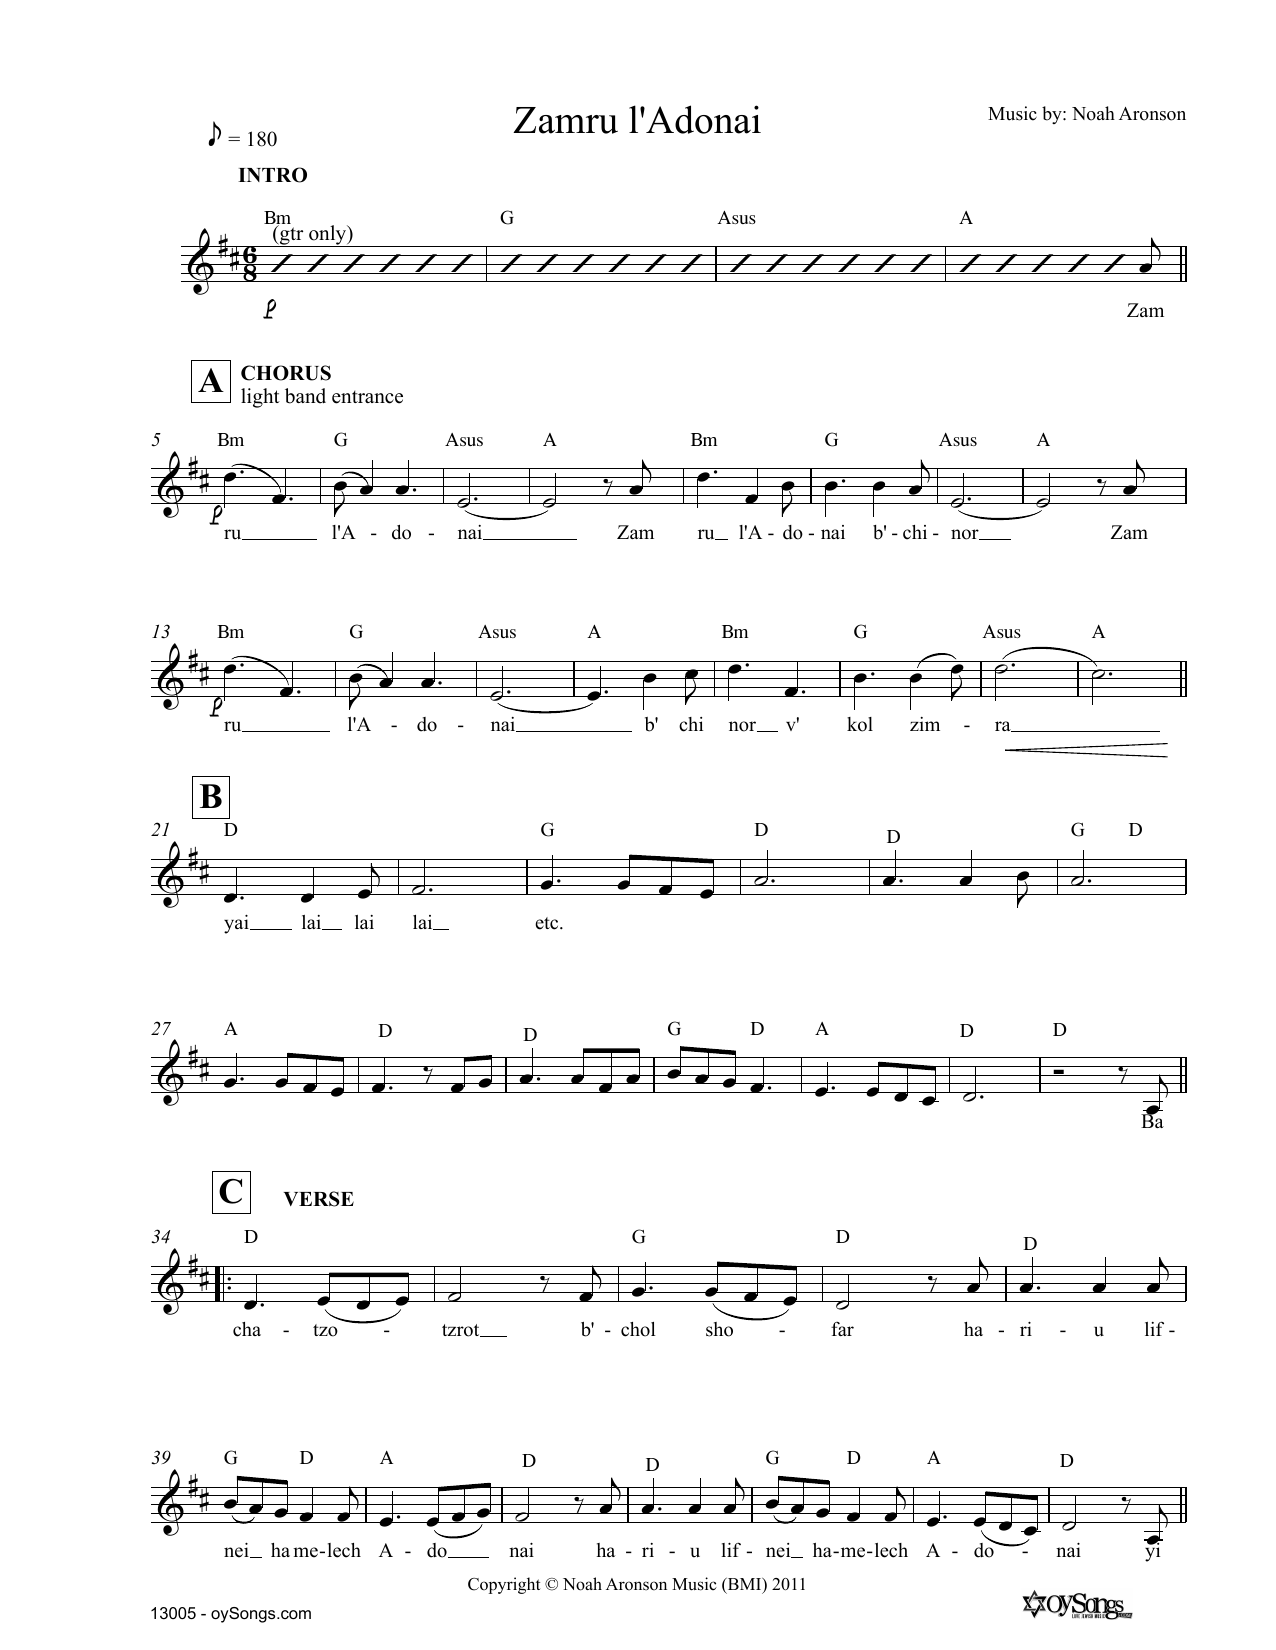 Noah Aronson Zamru l'Adonai Sheet Music Notes & Chords for Melody Line, Lyrics & Chords - Download or Print PDF